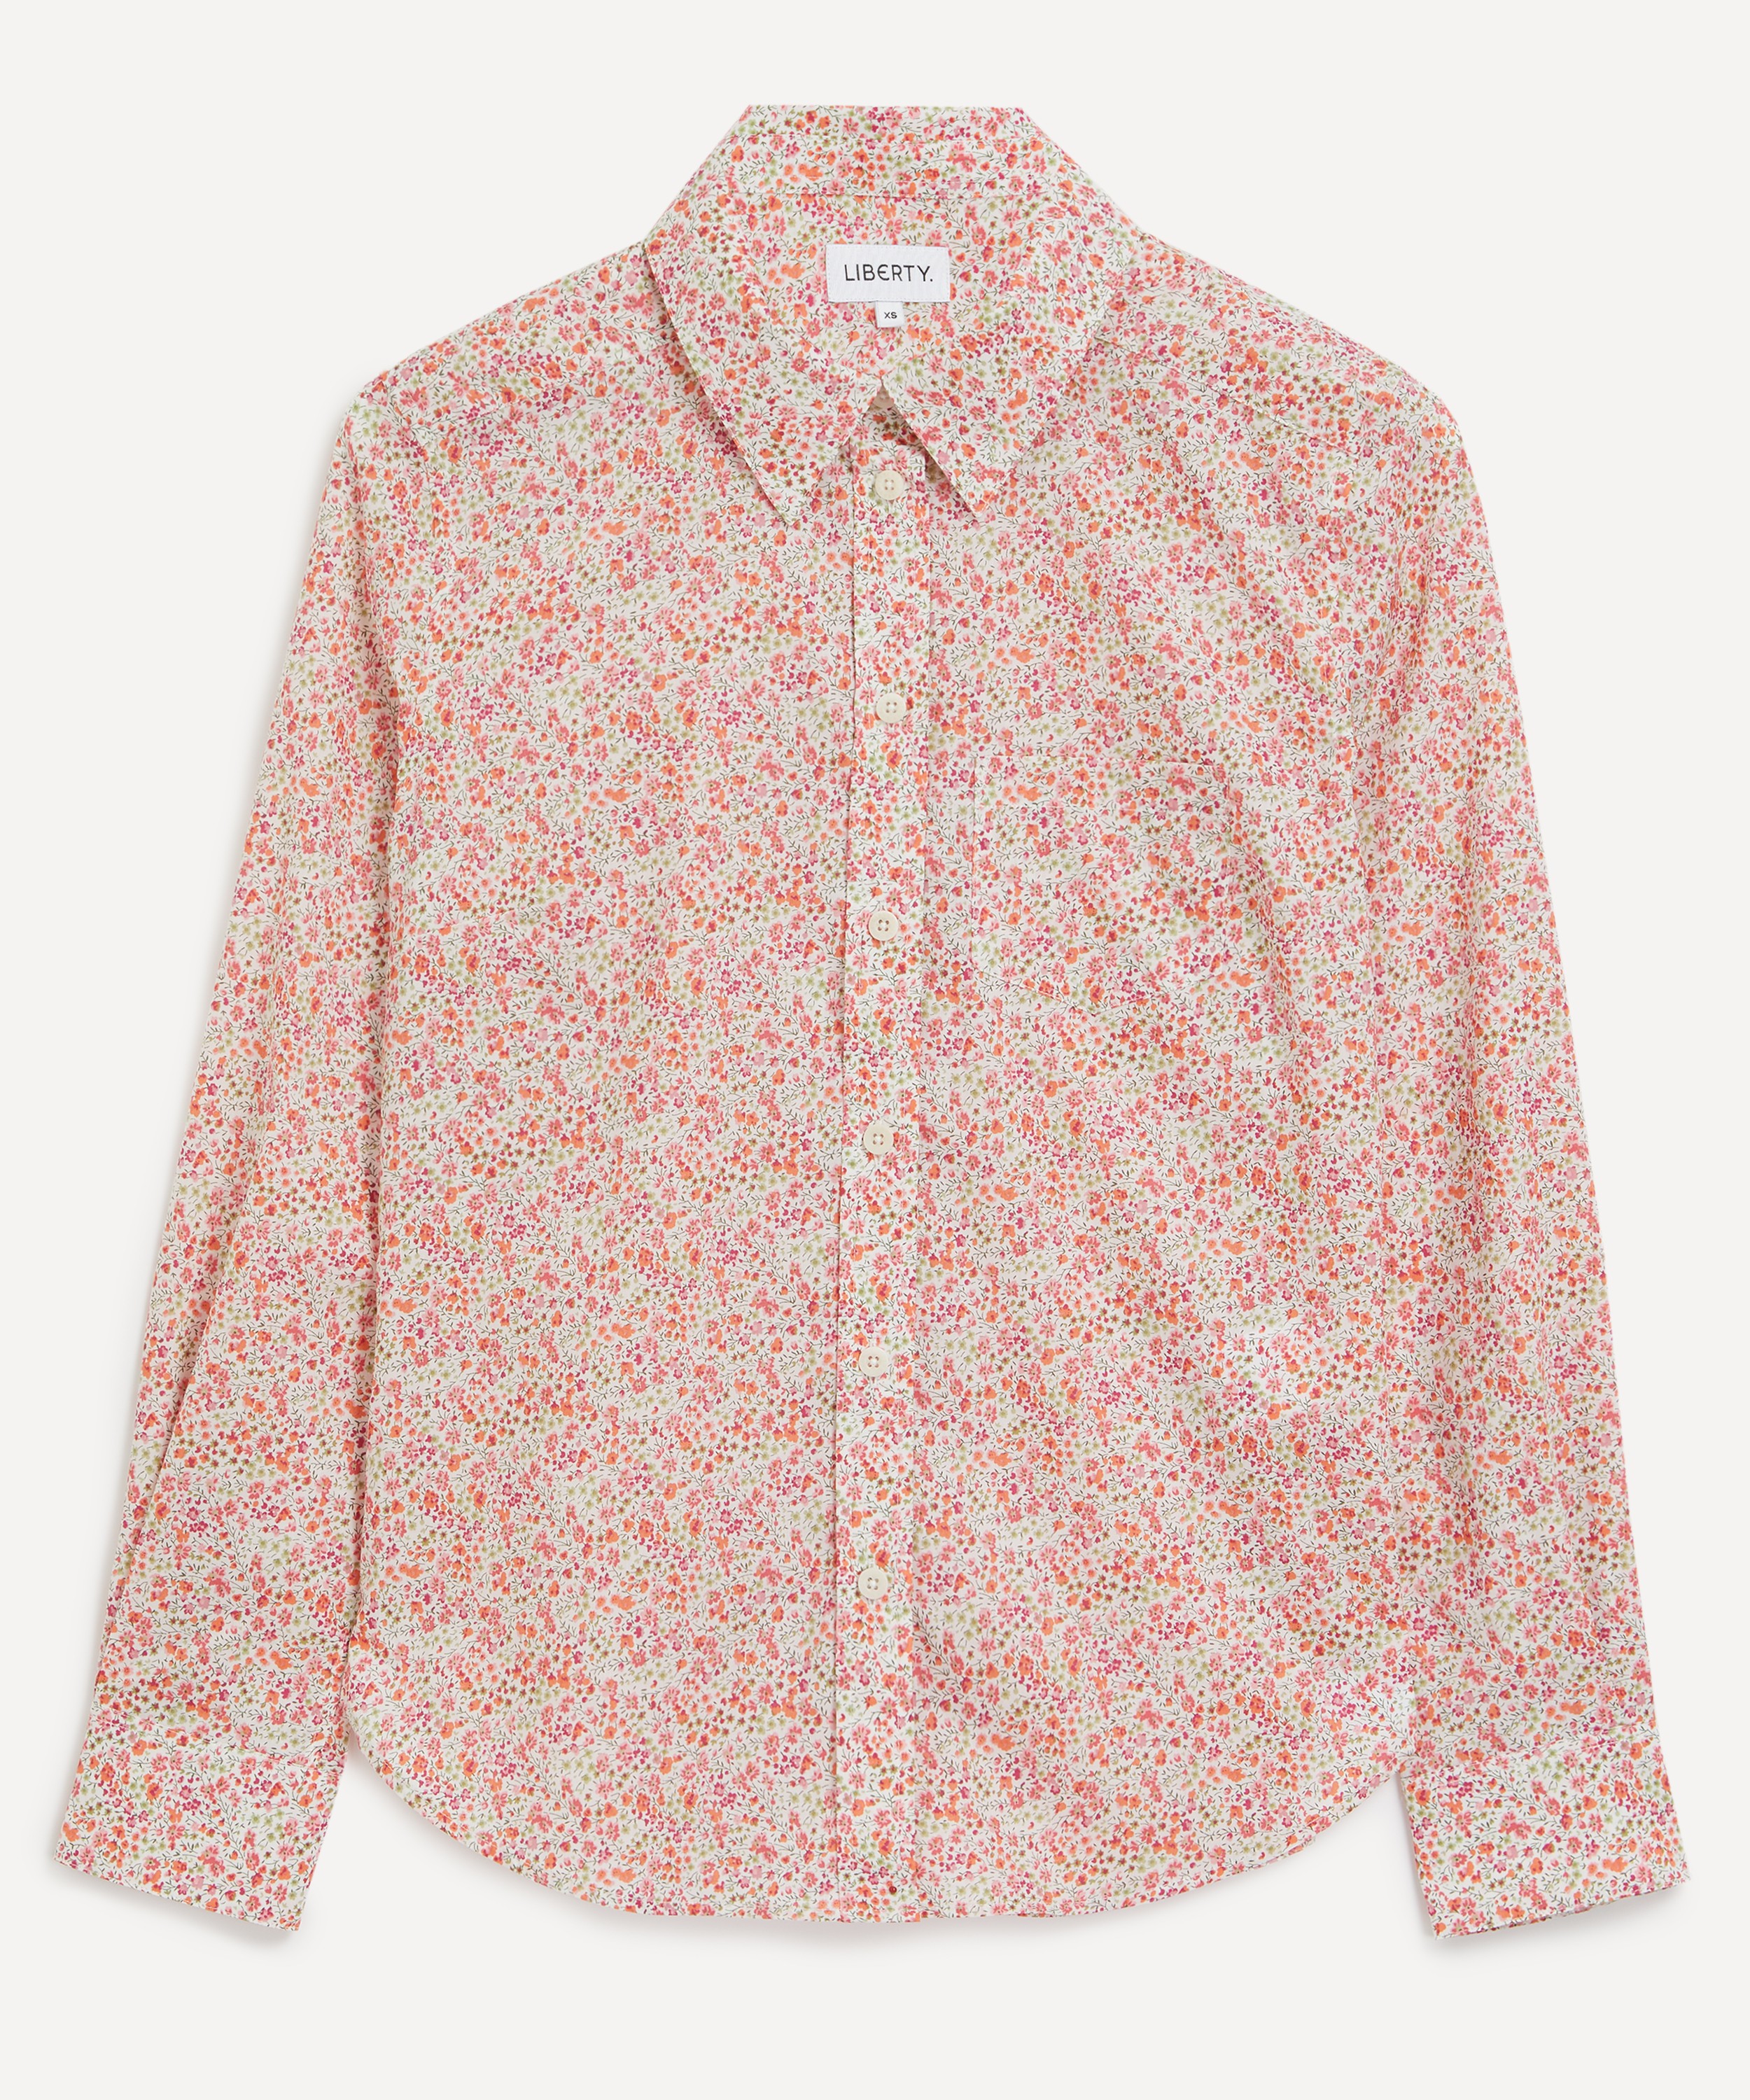 Liberty - Phoebe Fitted Tana Lawn™ Cotton Shirt